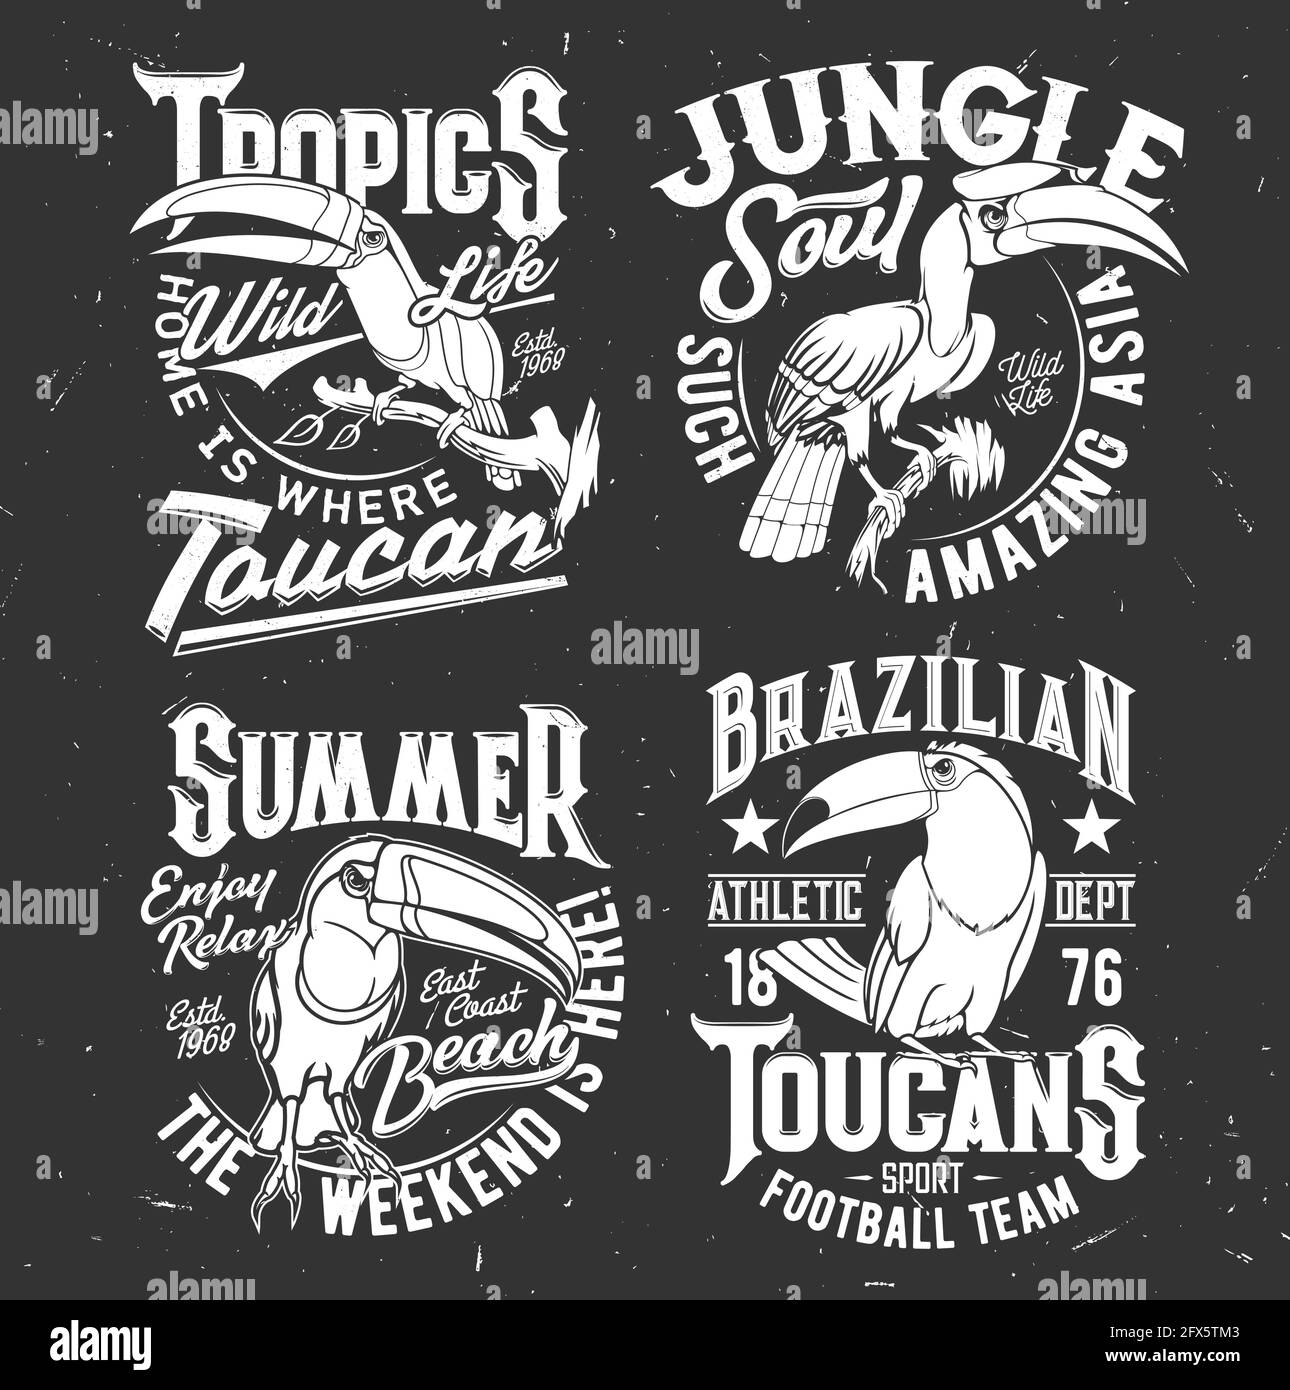 Toucan bird t-shirt retro print template. Football sport team, tropical wildlife and summer leisure apparel custom vector print with animal mascot, gr Stock Vector